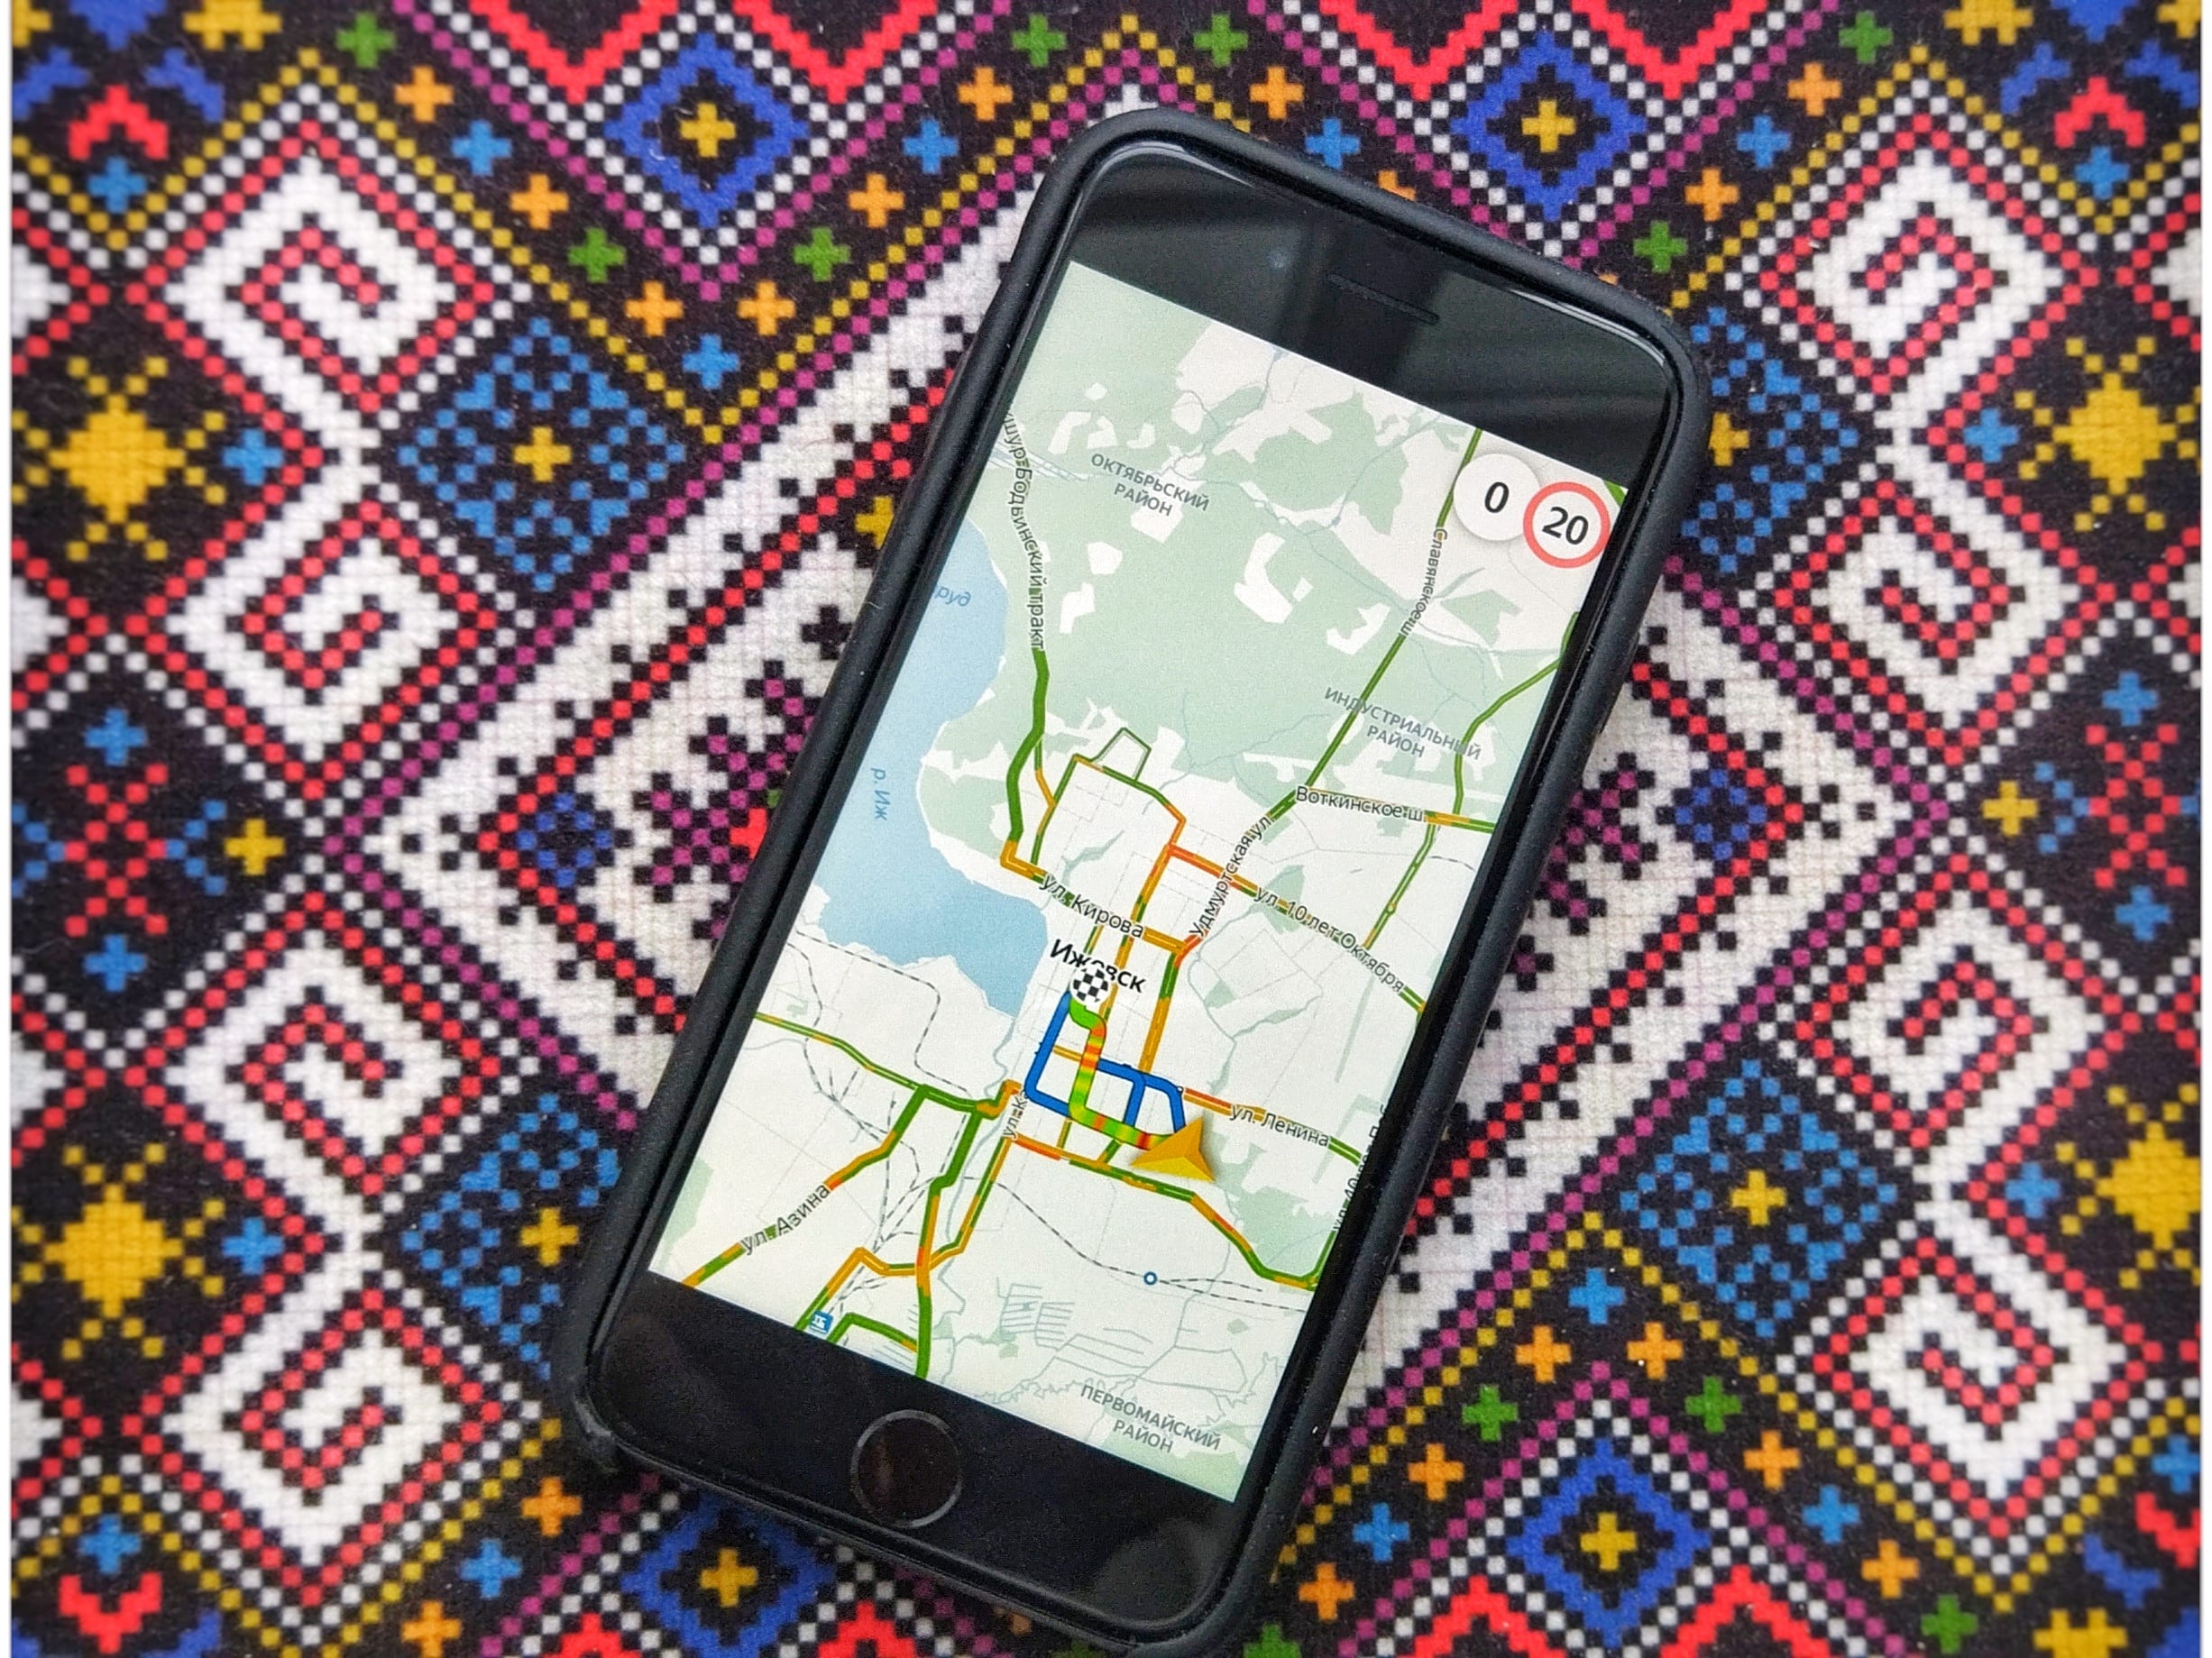 Фото смартфона с запущенным приложением яндекс навигатор на фоне разноцветного коврика